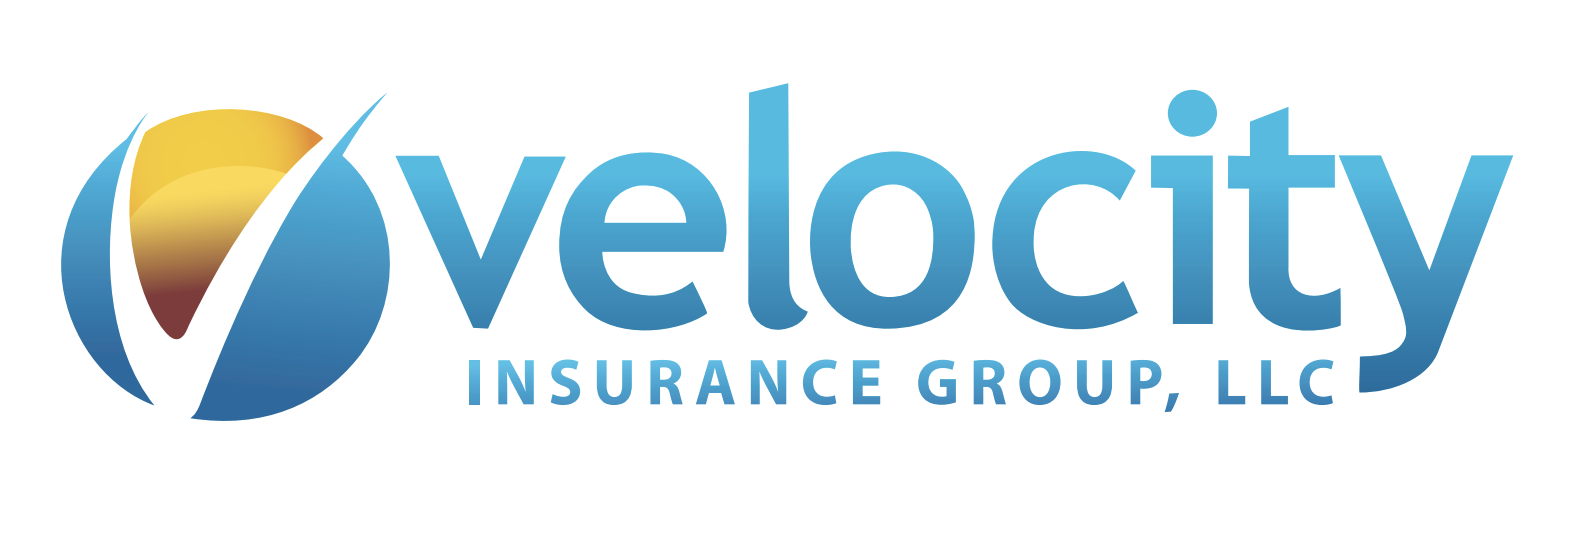 Velocity Insurance Group